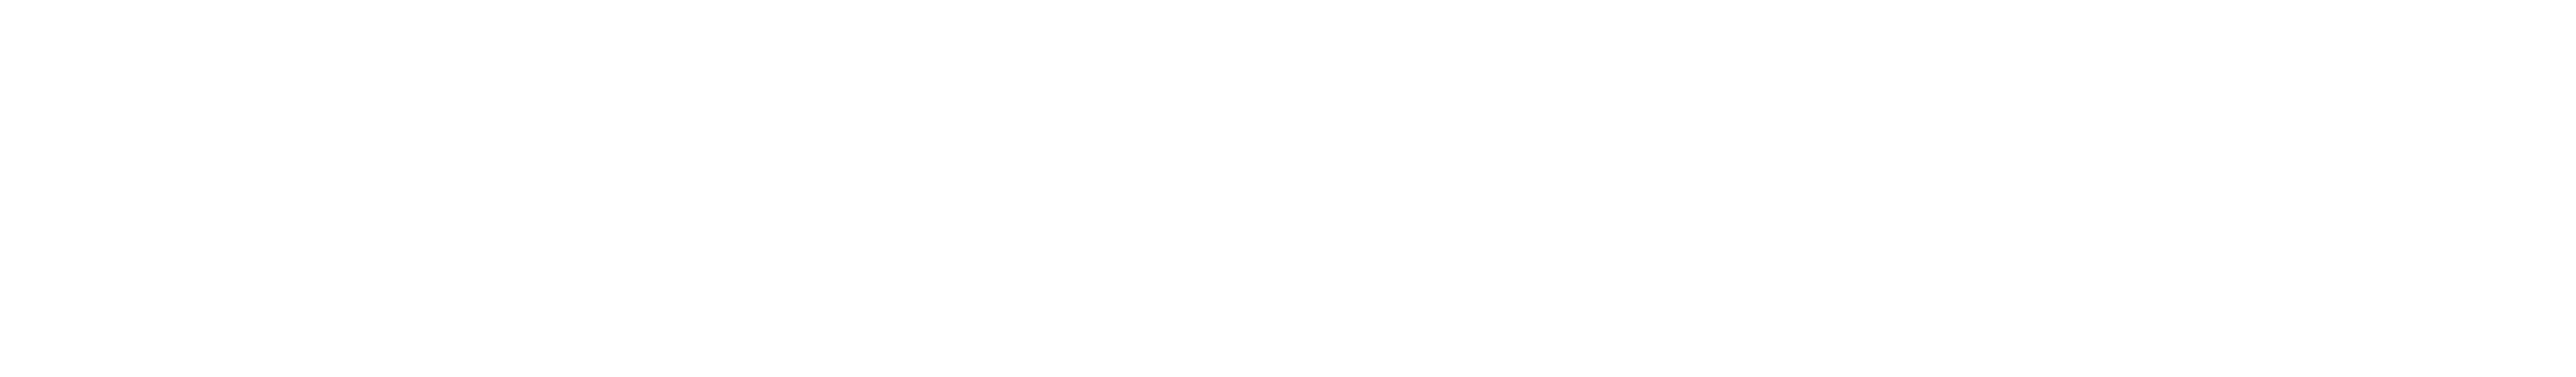 Älvräddarna logo namn